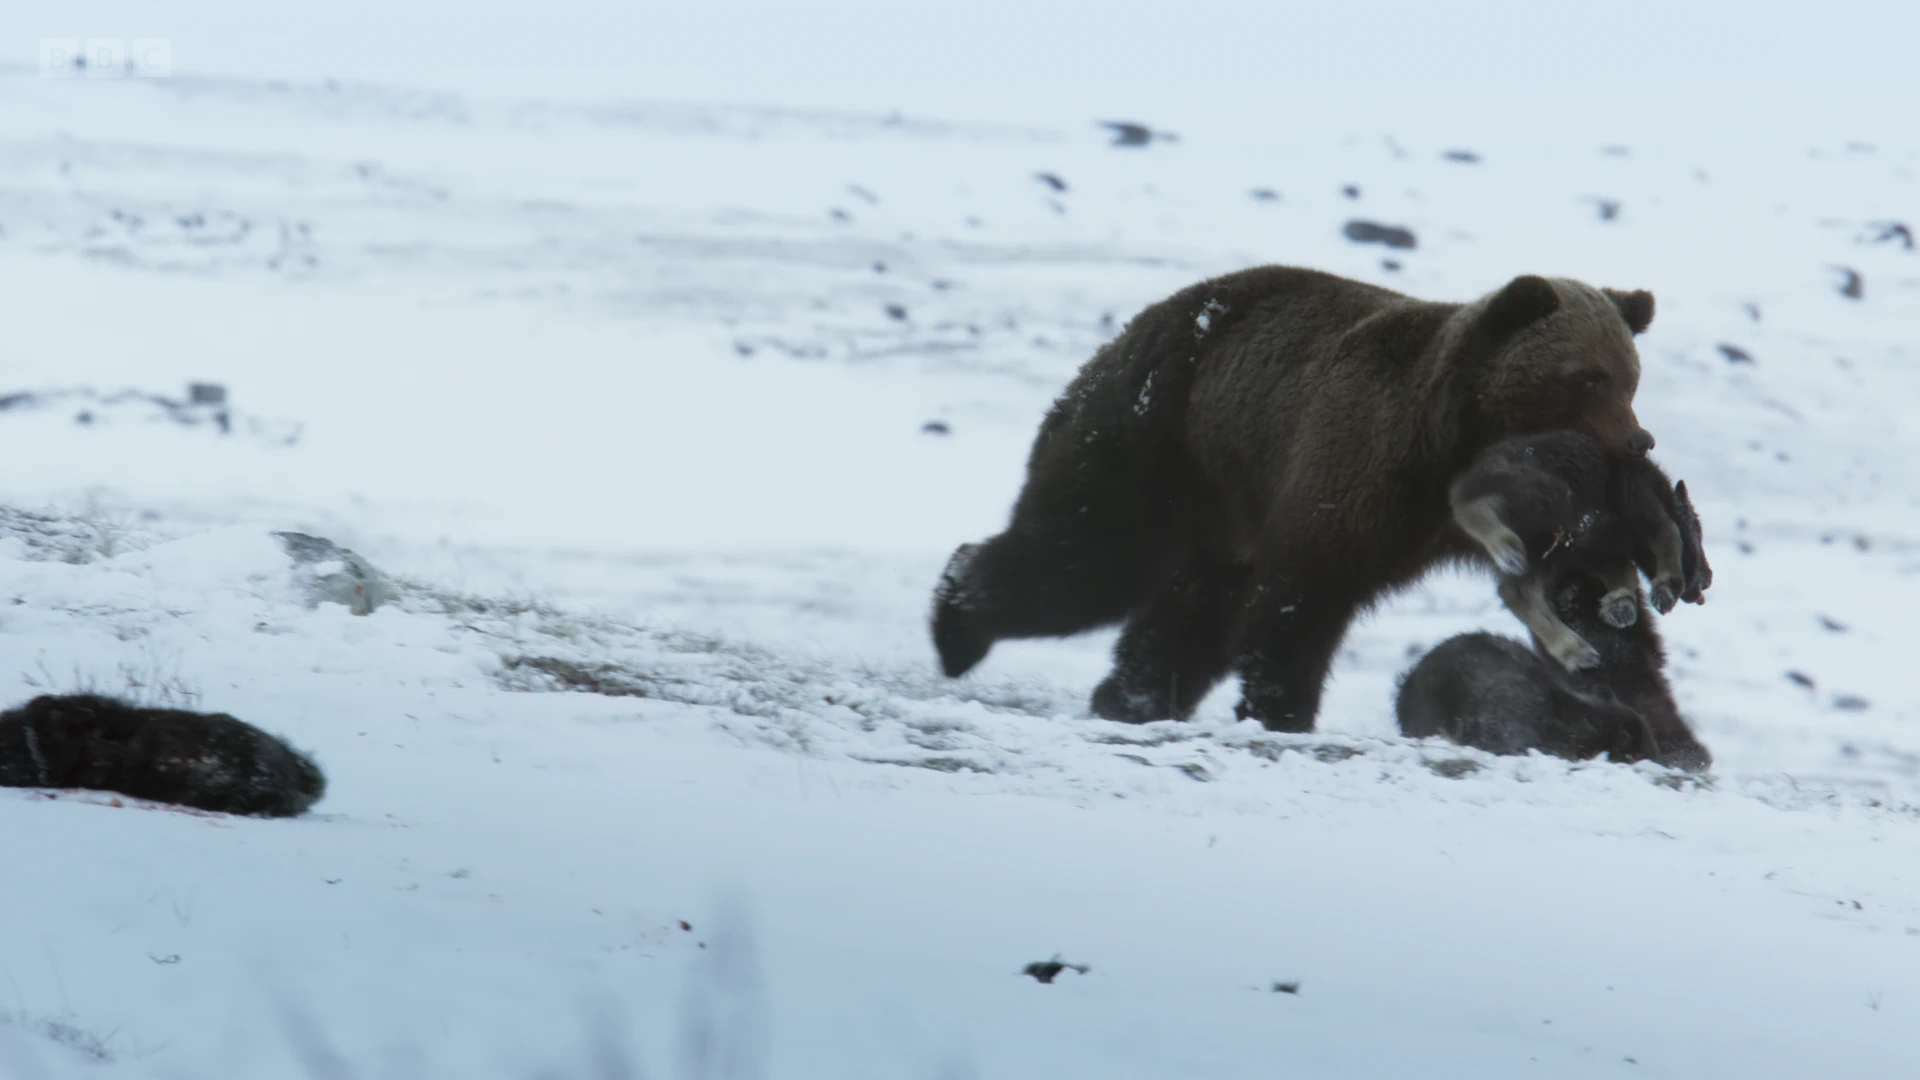 Grizzly bear (Ursus arctos horribilis) as shown in Frozen Planet II - Frozen Worlds